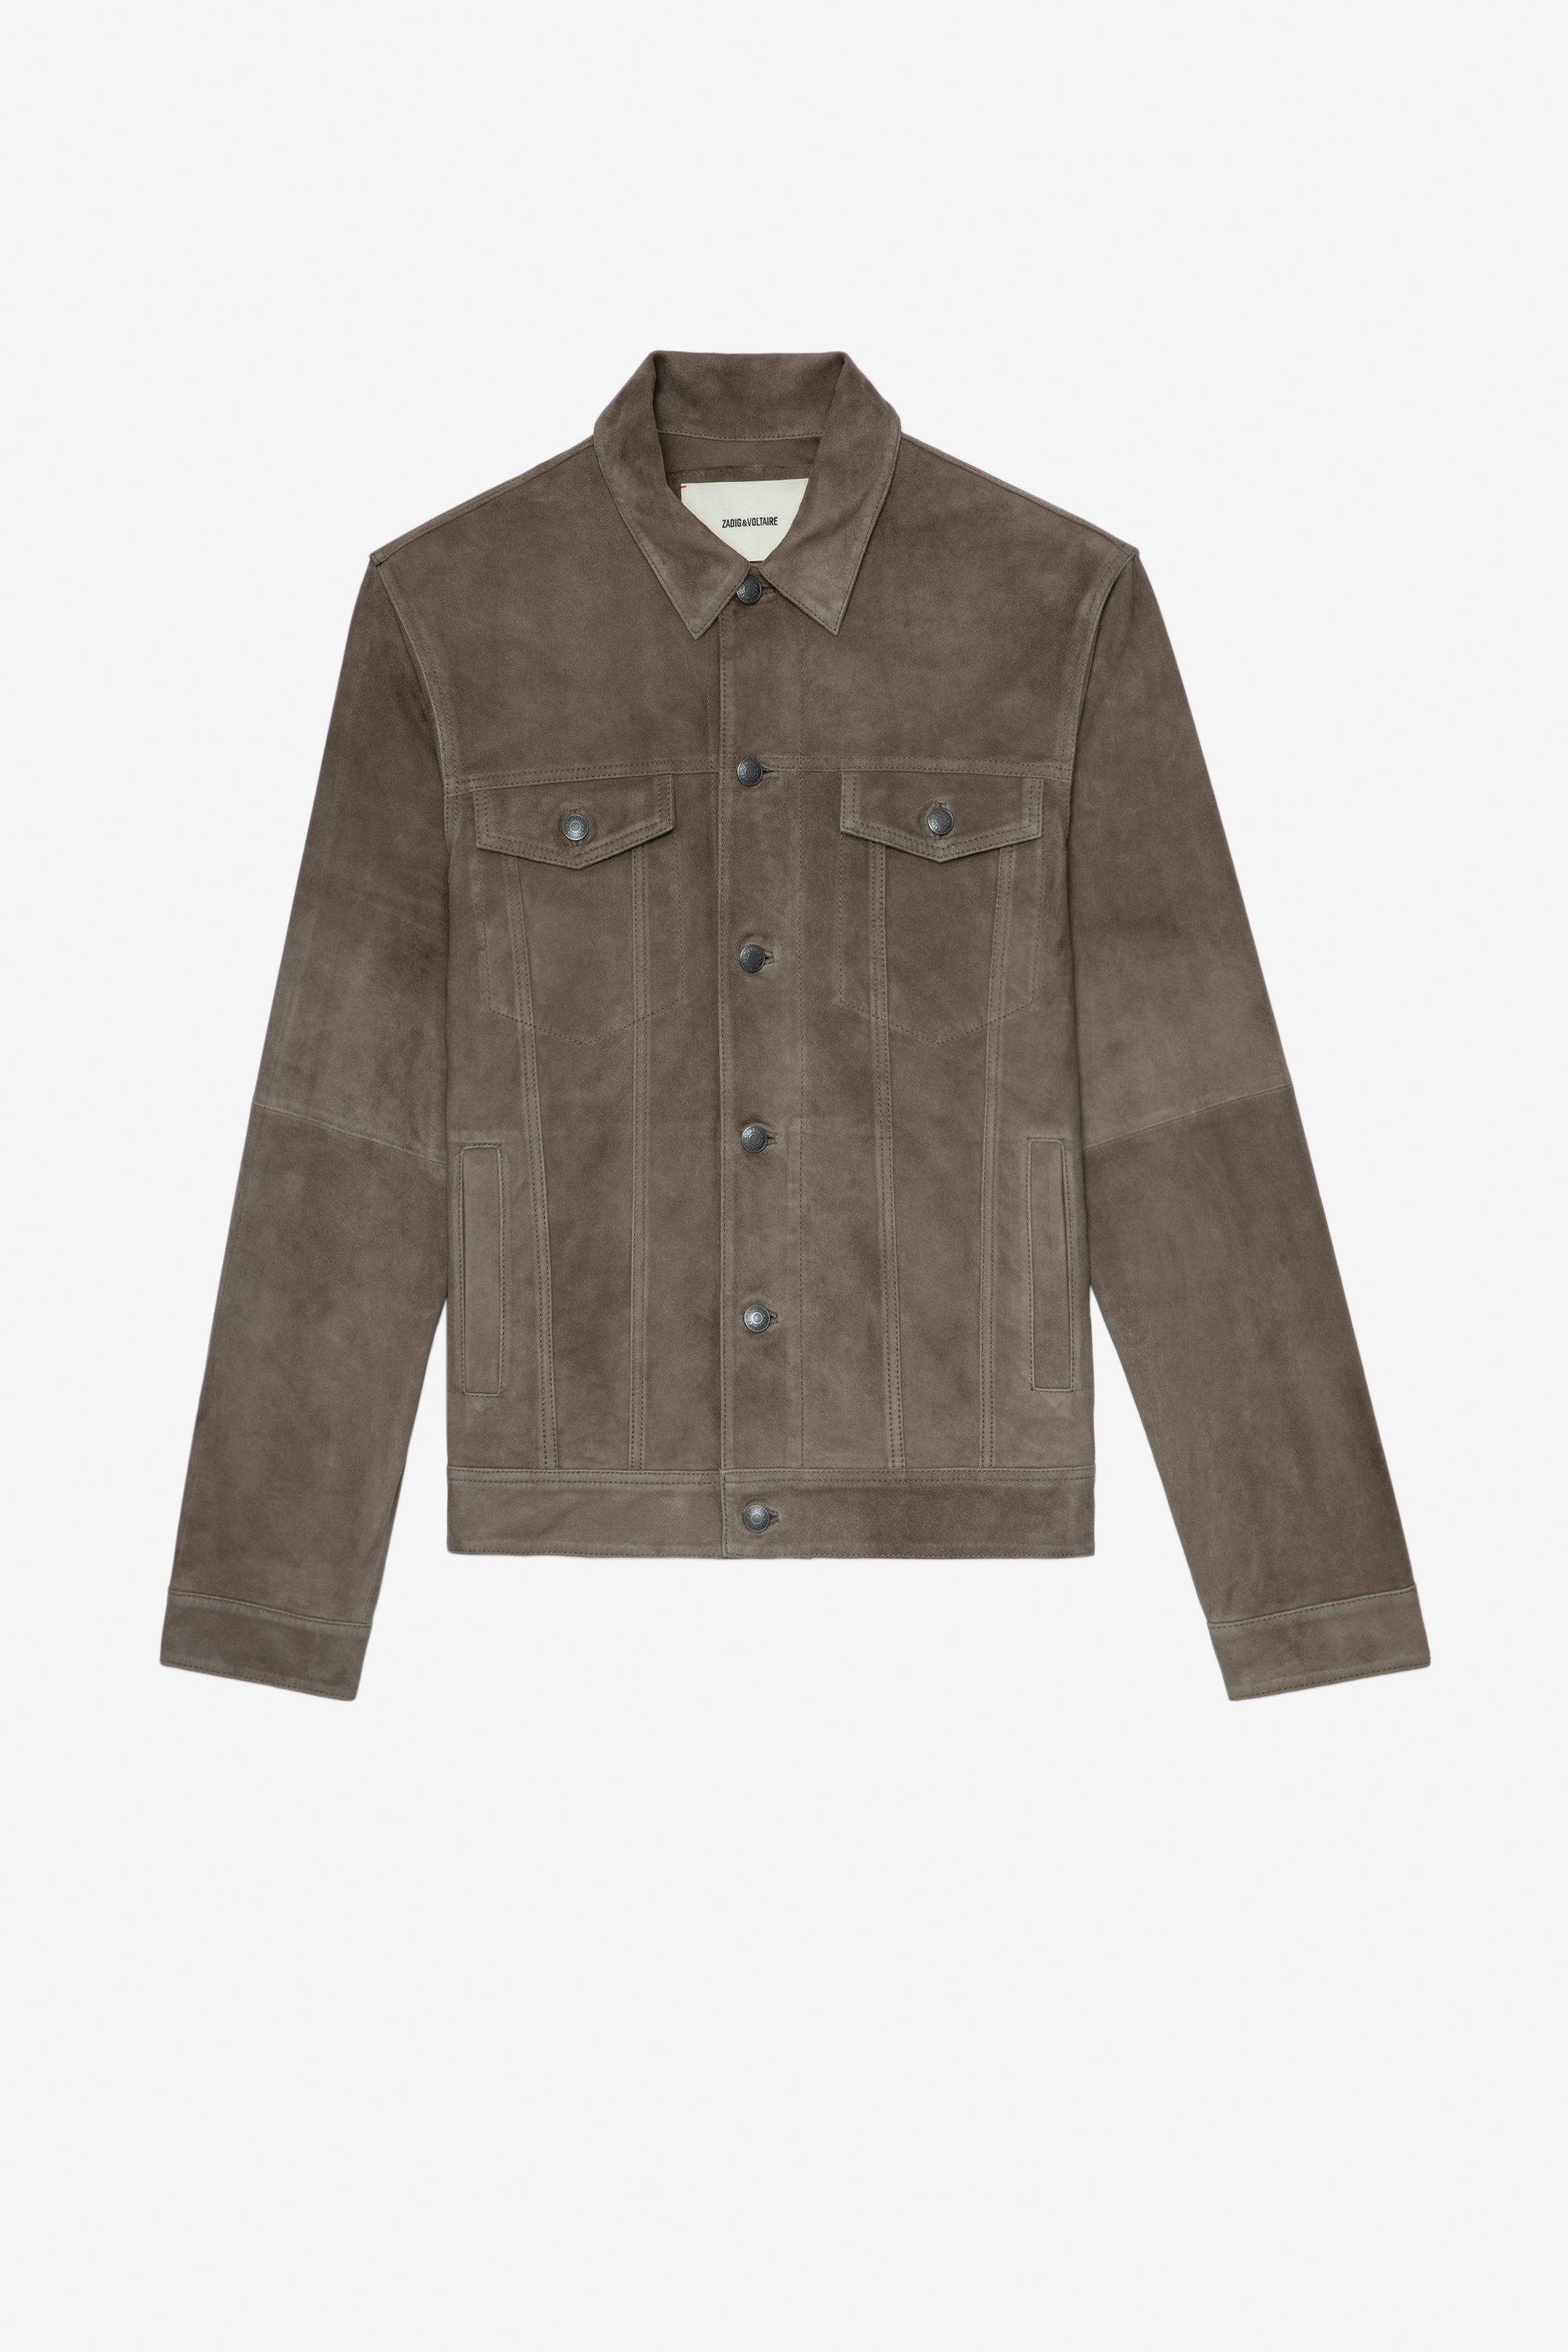 Base Jacket Men's grey suede jacket